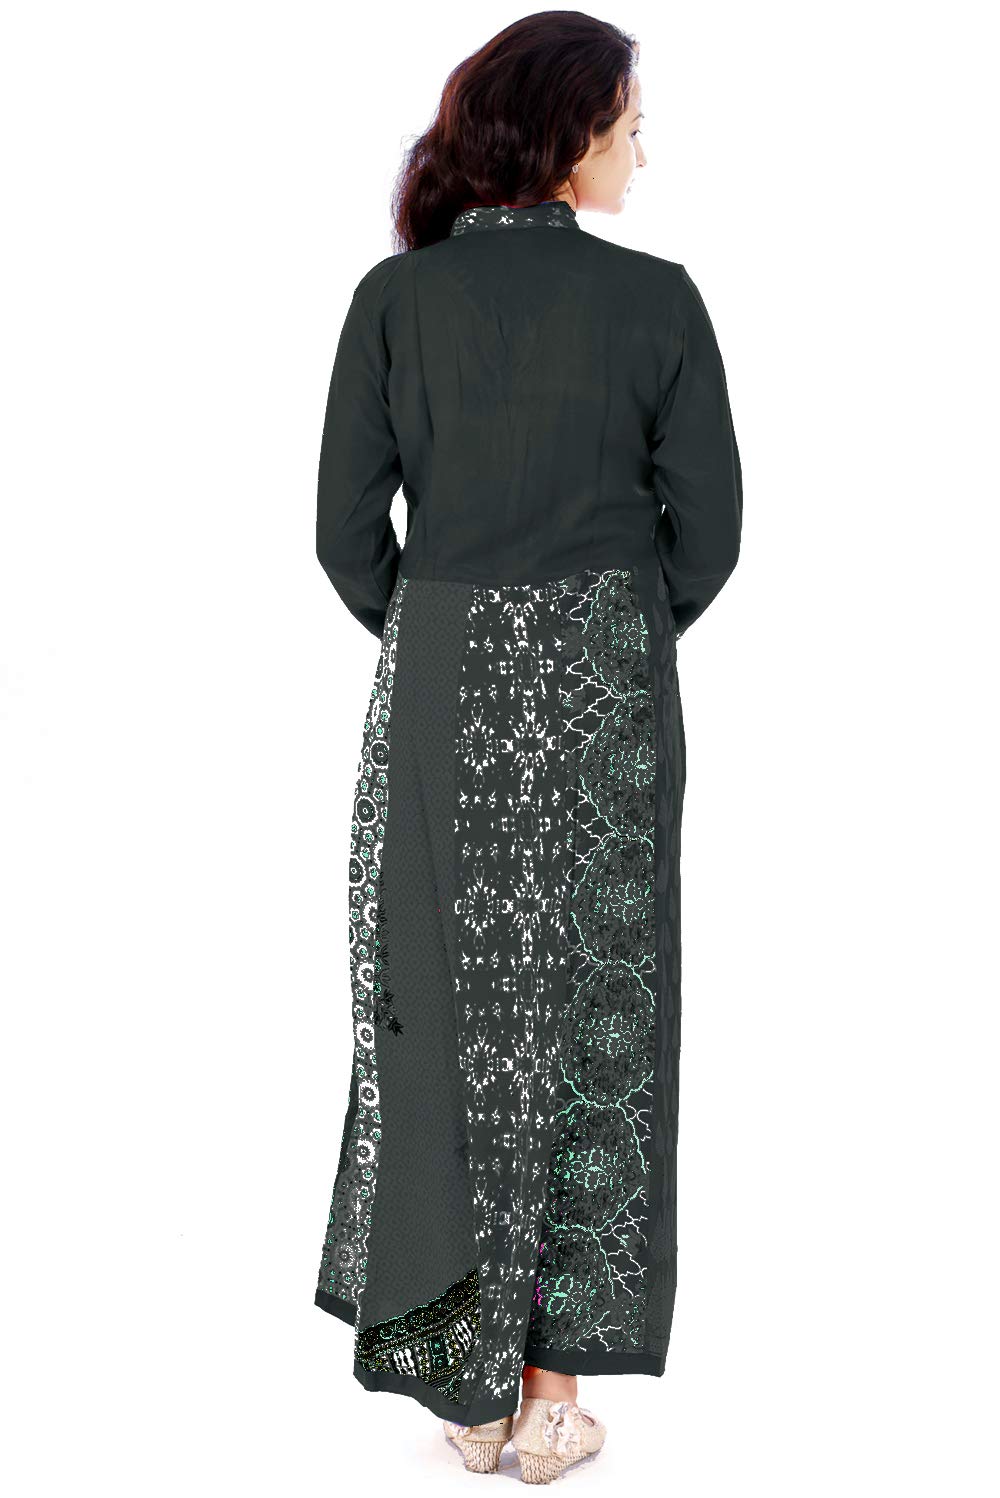 lakkar haveli Indian 100% Cotton Black Color Dress Women Fashion Long Plus Size